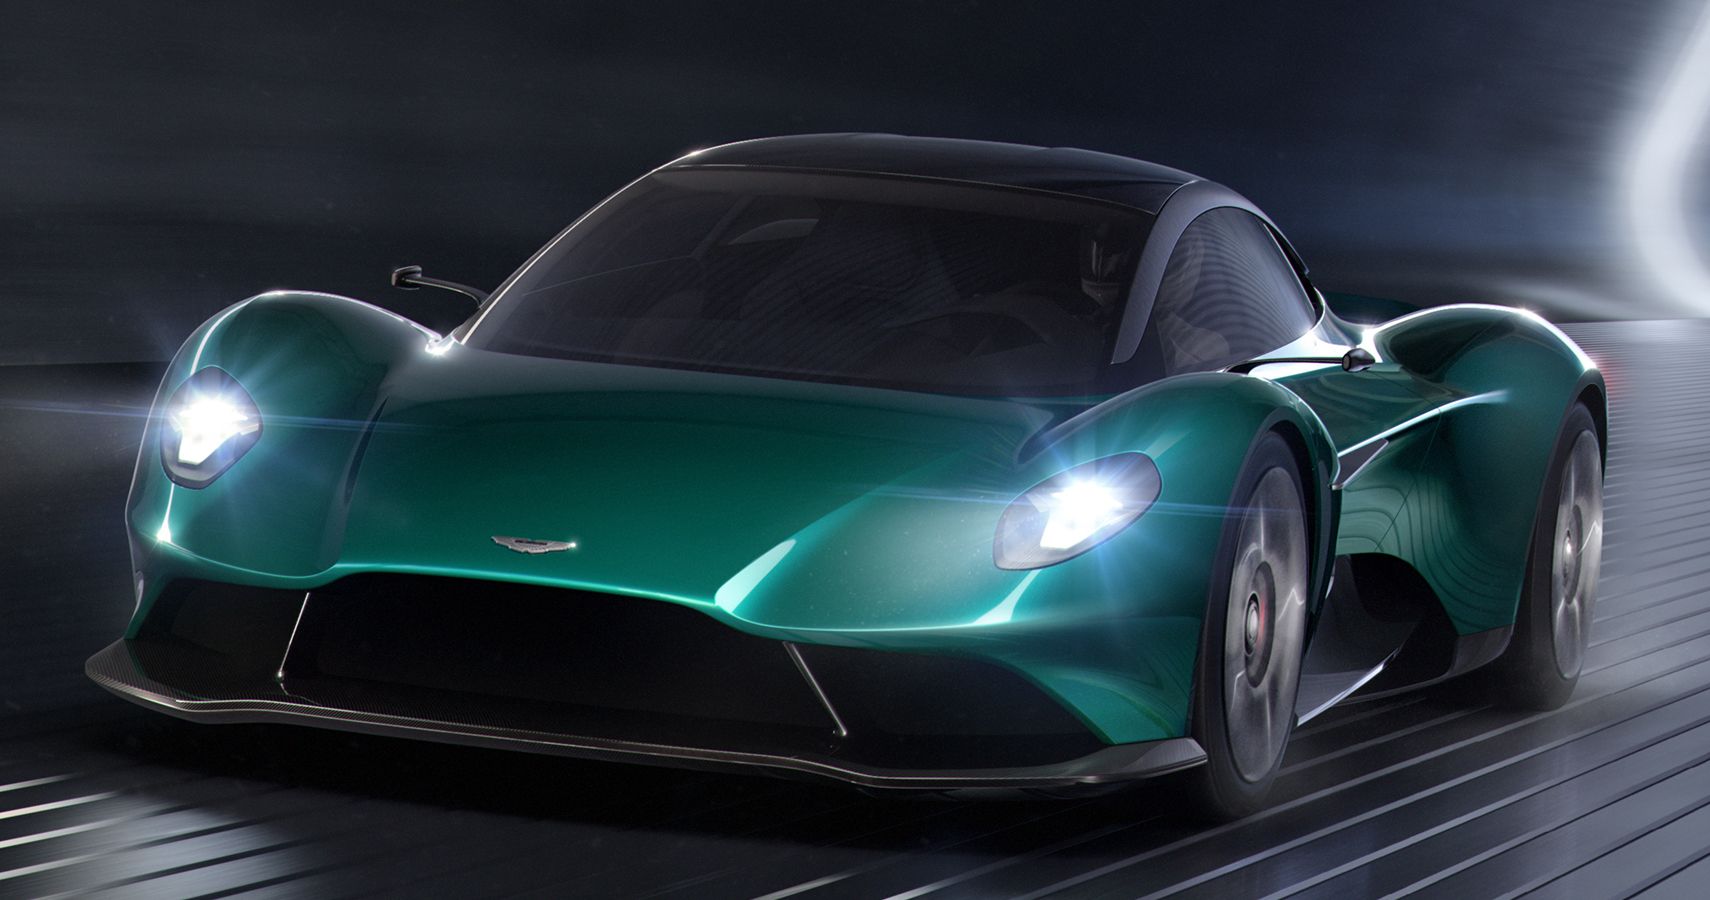 British Green Aston Martin Vanquish Vision Concept front view